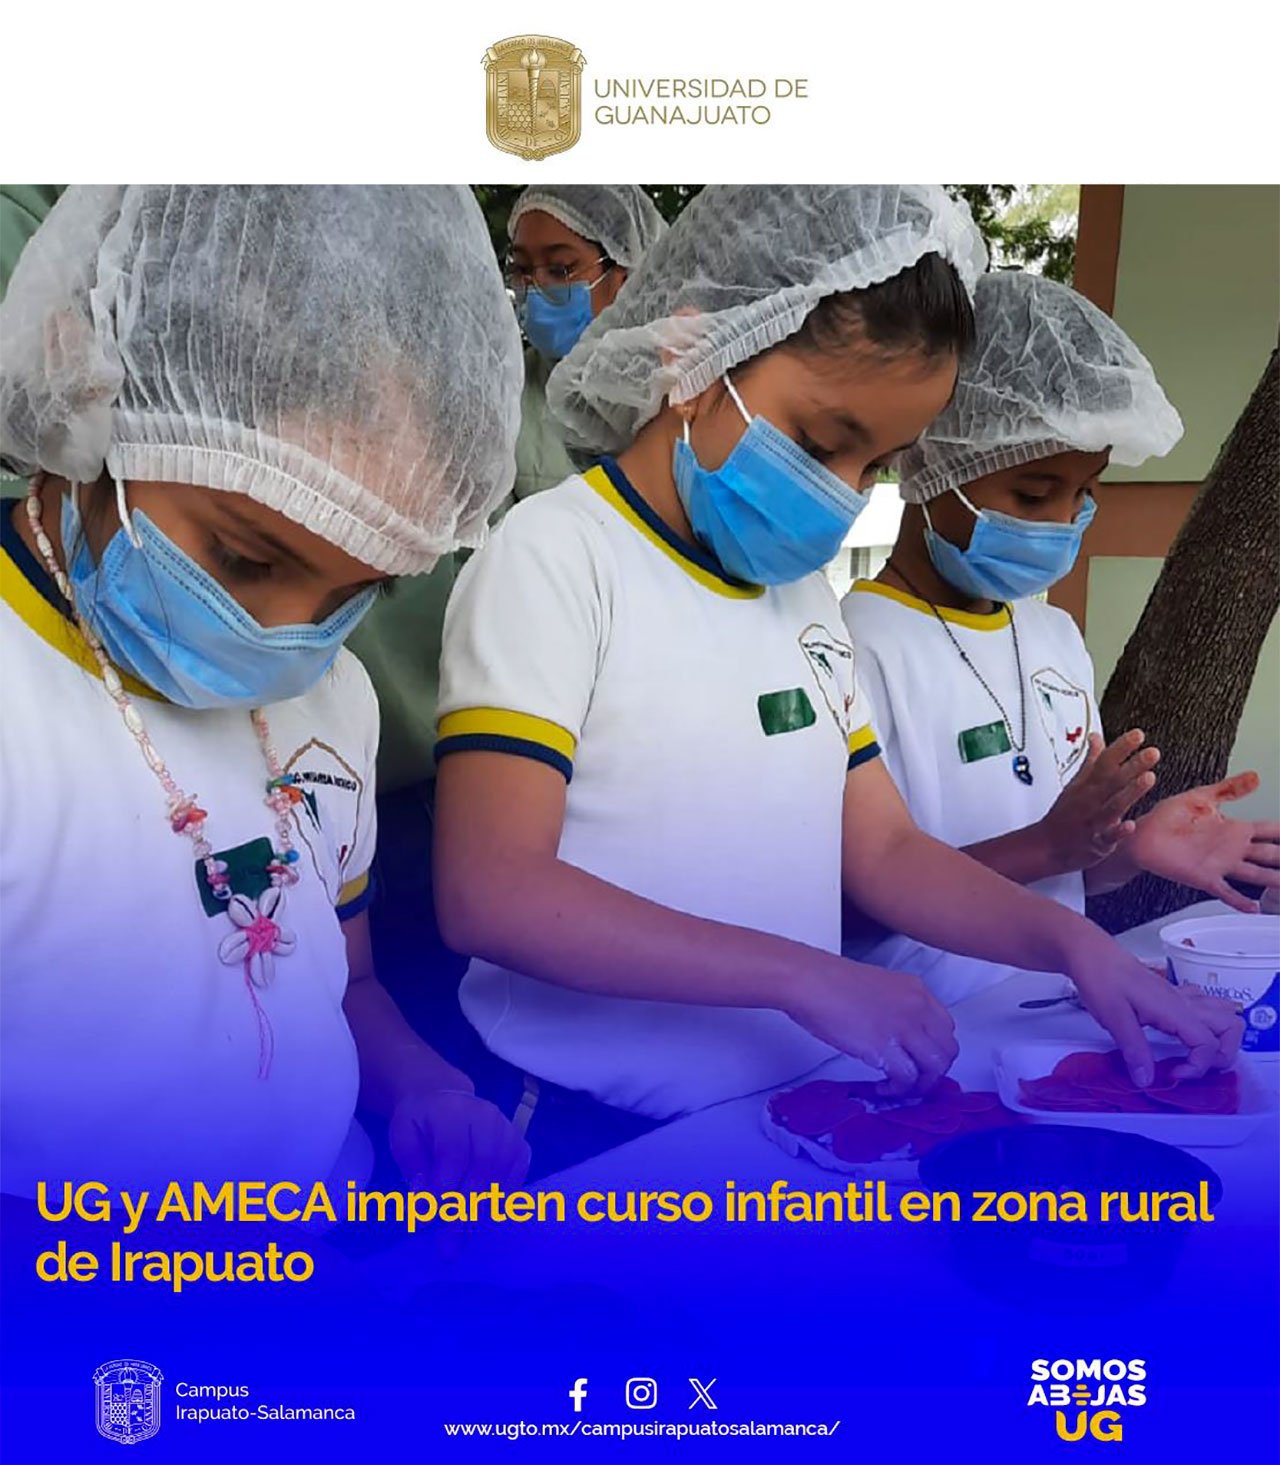 UG y AMECA imparten curso infantil en zona rural de Irapuato. Curso Kids. Irapuato, Guanajuato - AMECA, AC